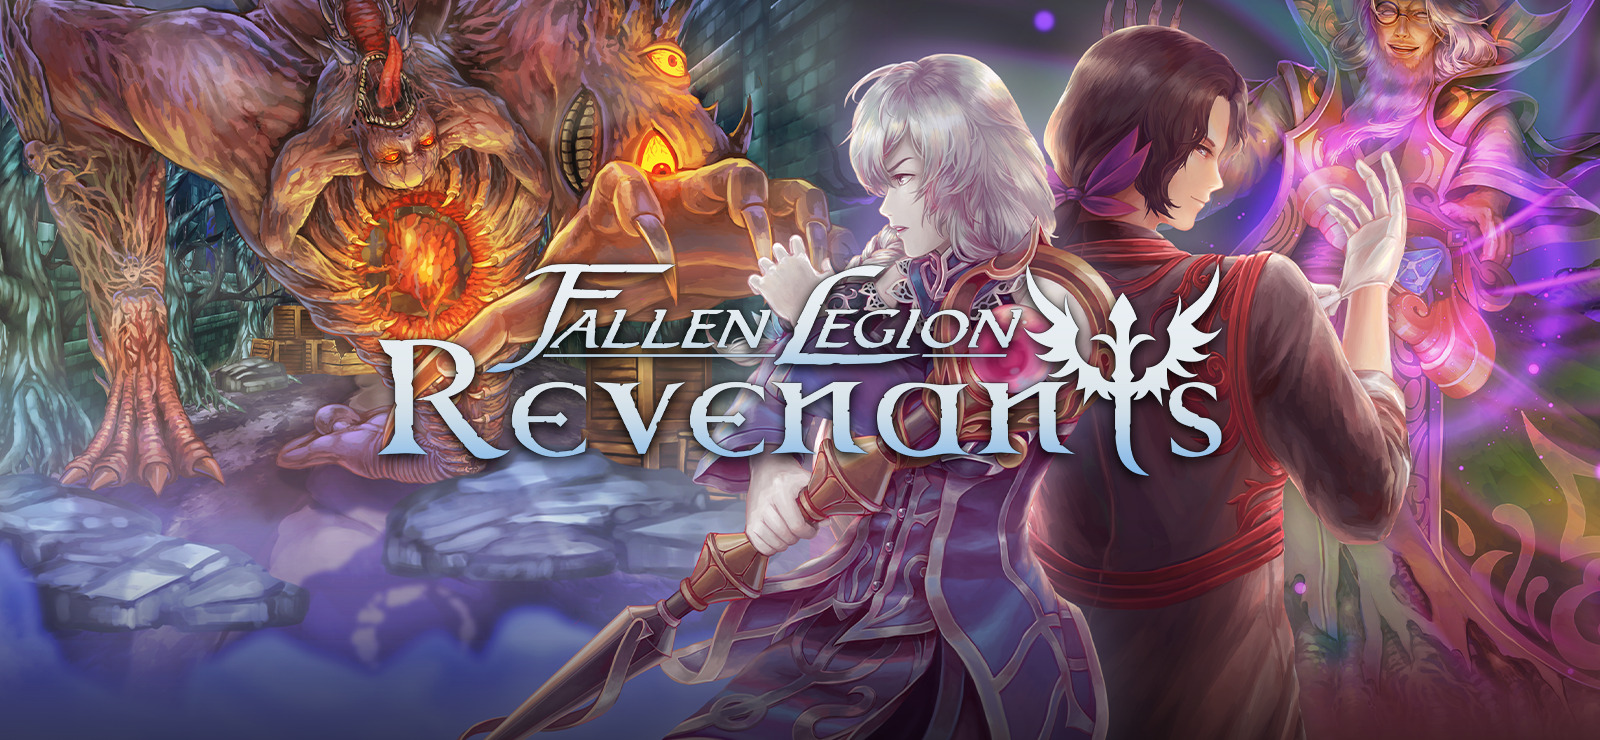 Fallen Legion Revenants download the new version